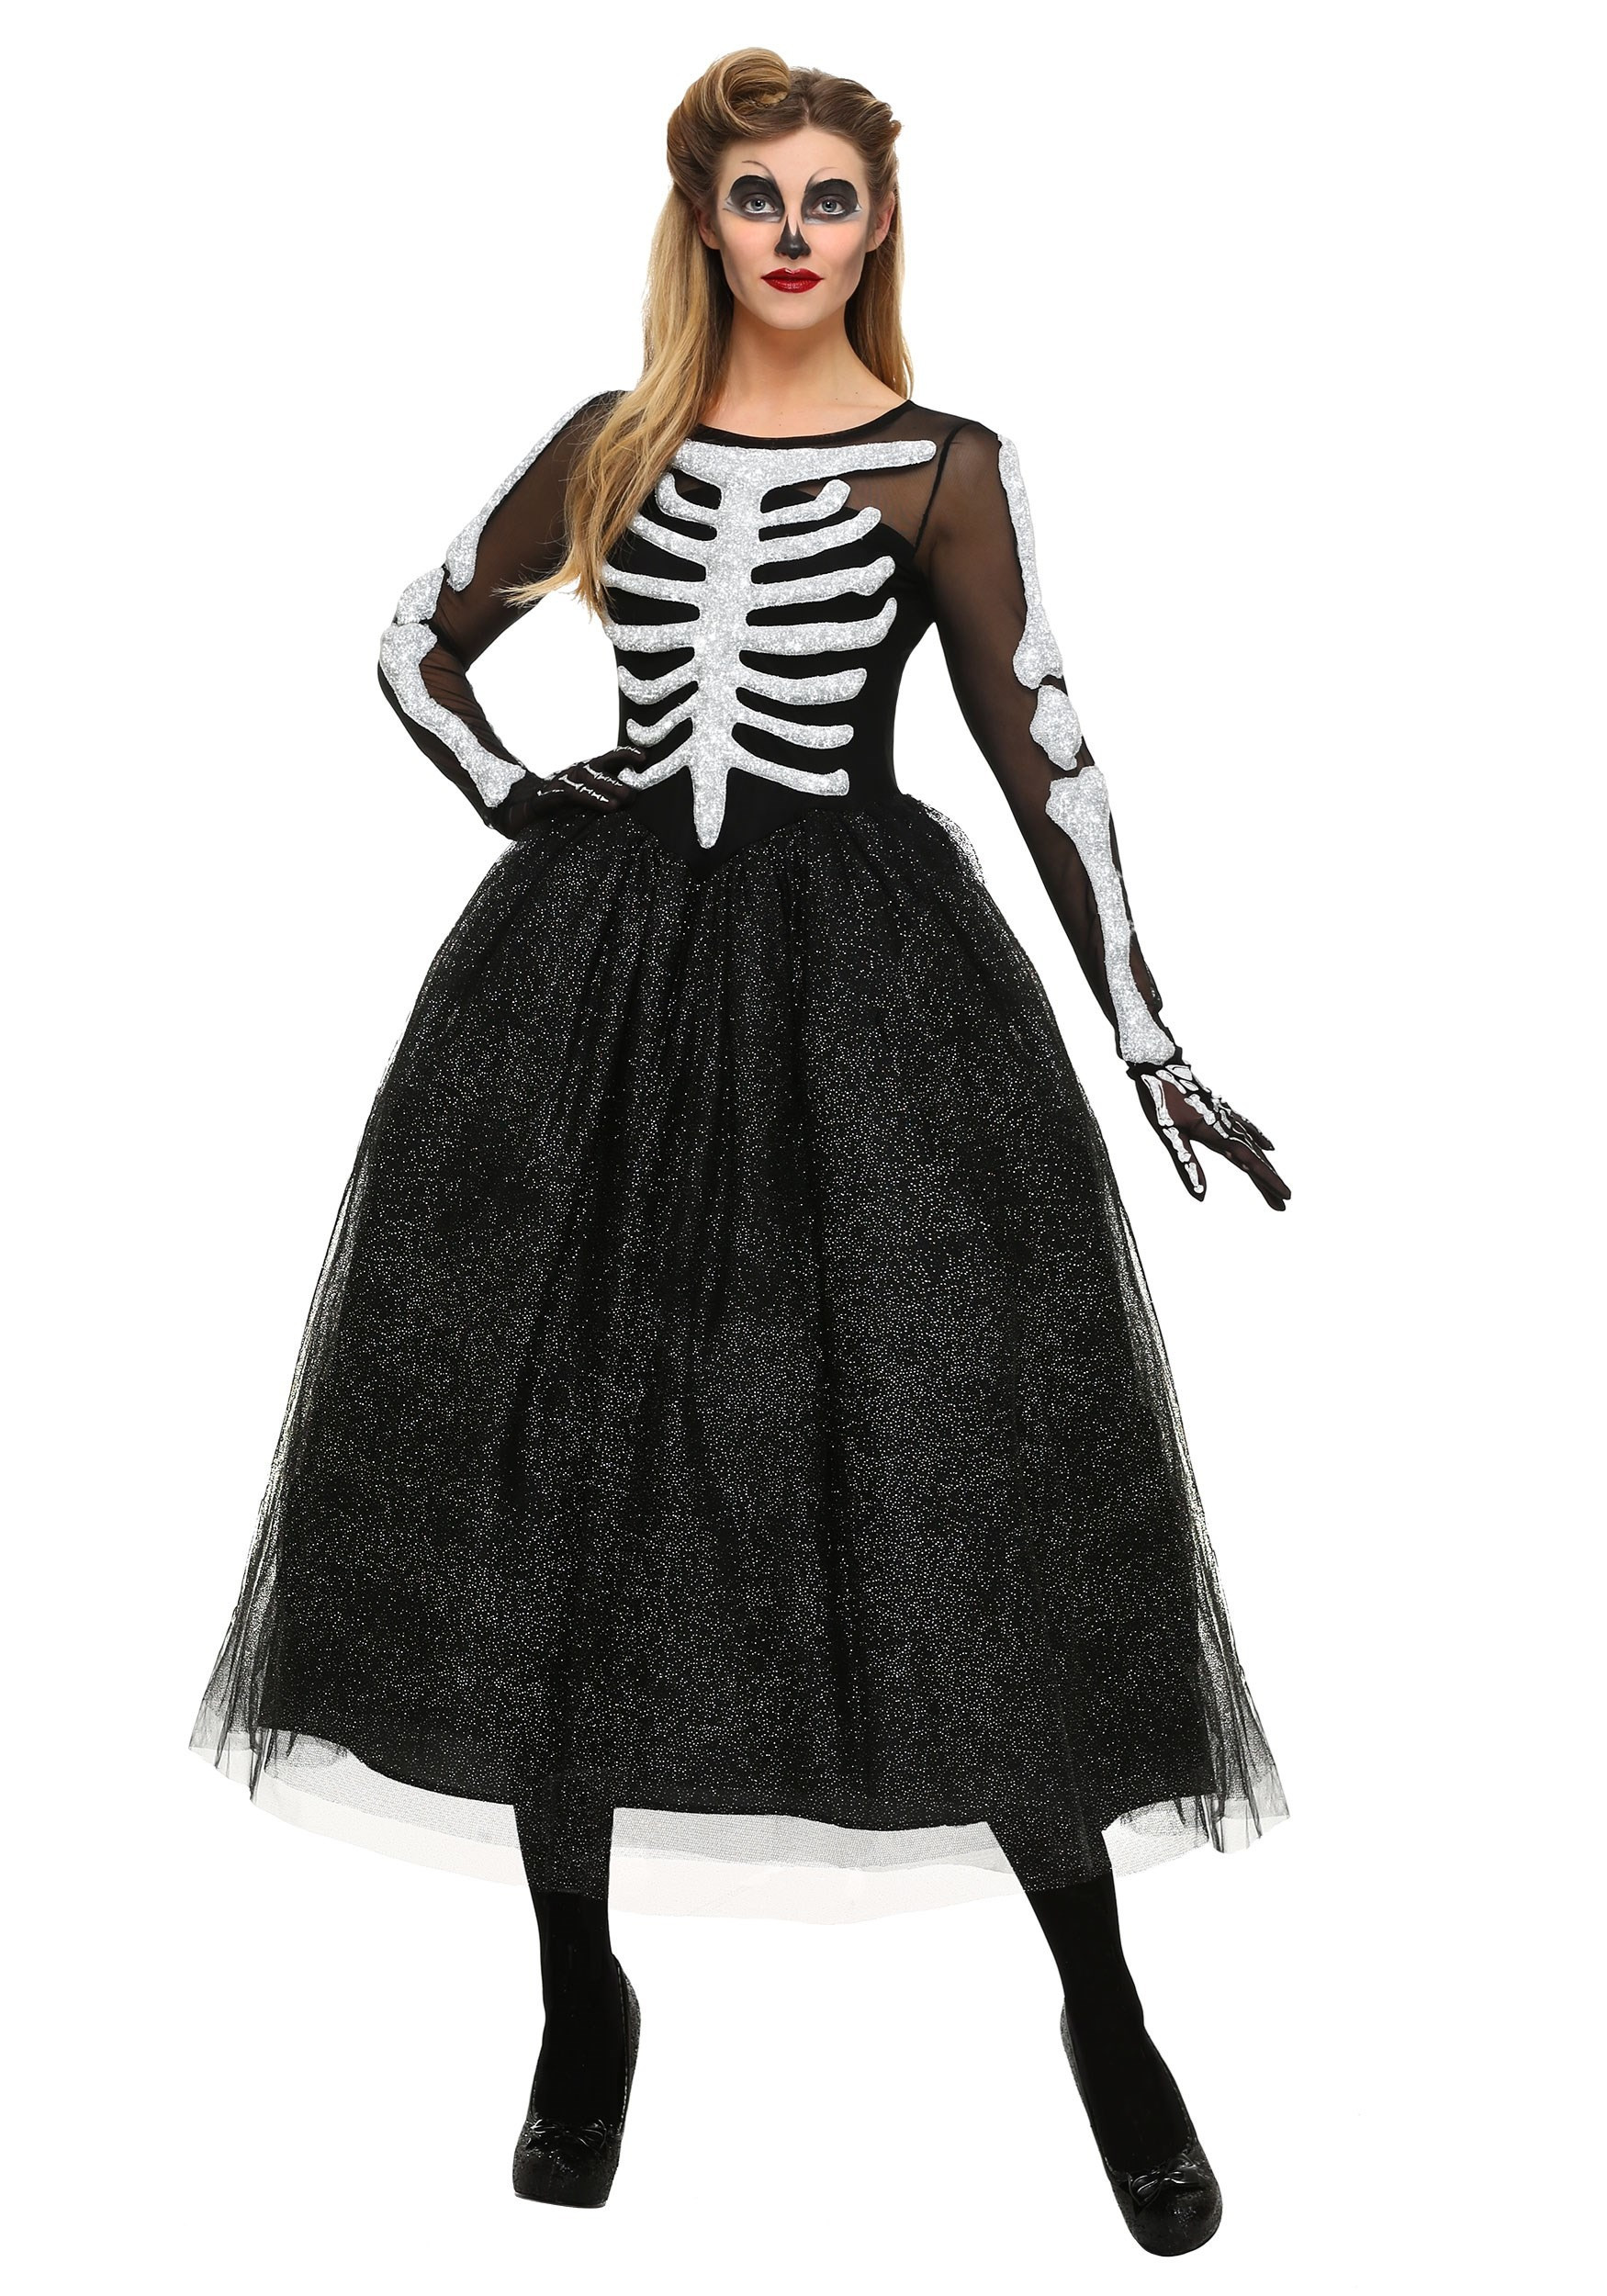 DIY Plus Size Halloween Costume
 Women s Skeleton Beauty Plus Size Costume 1X 2X 3X 4X